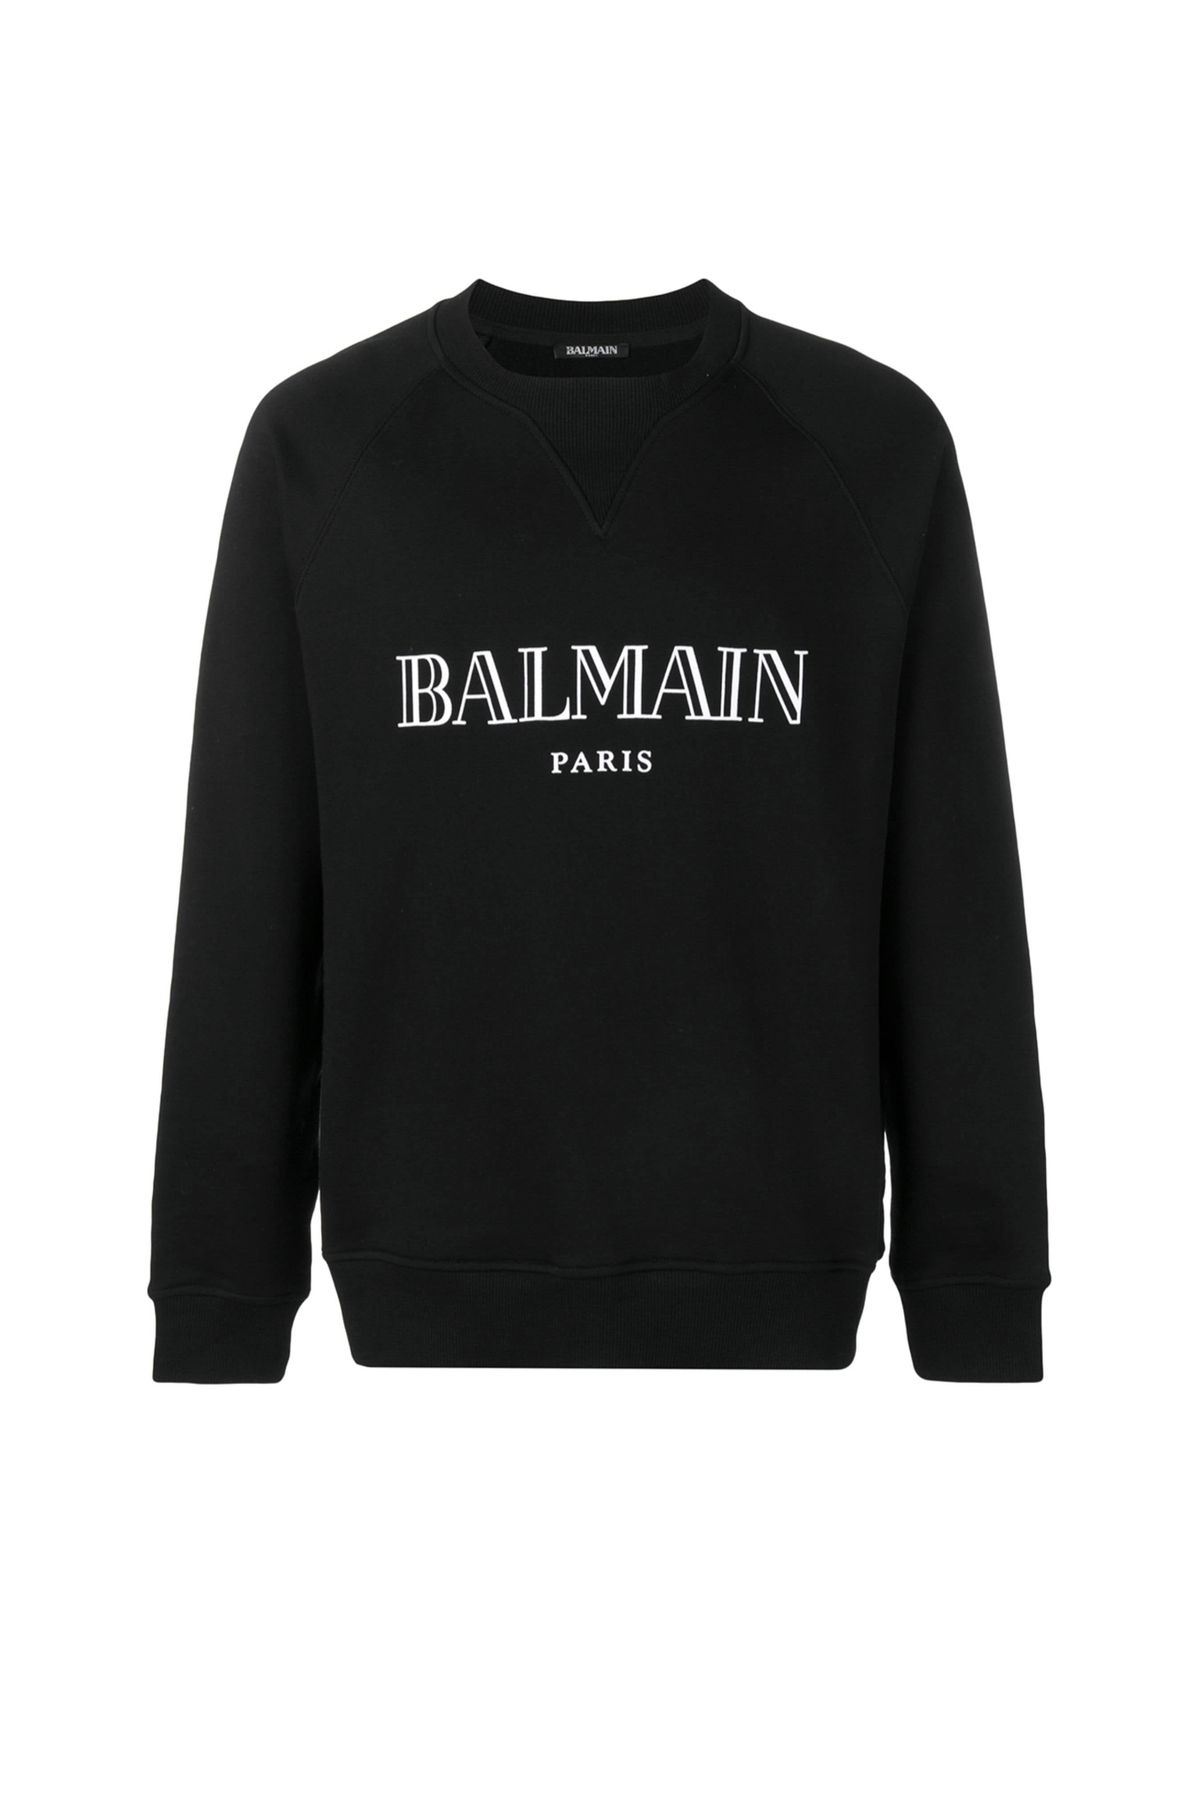 BALMAIN logo print sweatshirt